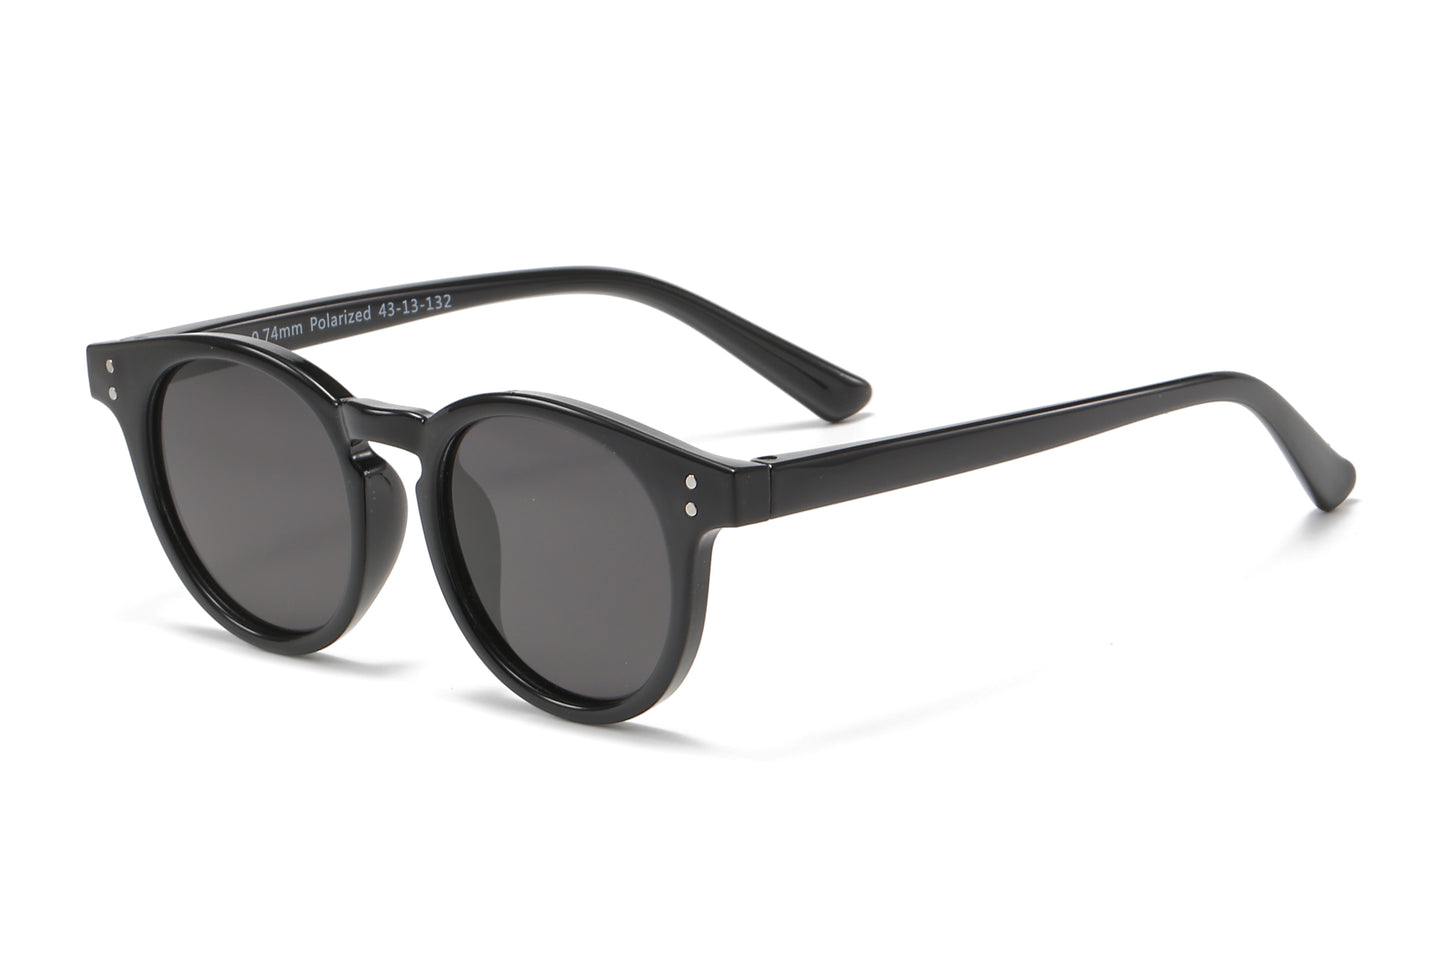 PL 3022 - Polarized Kids TR90 Rubber Flexible Sunglasses